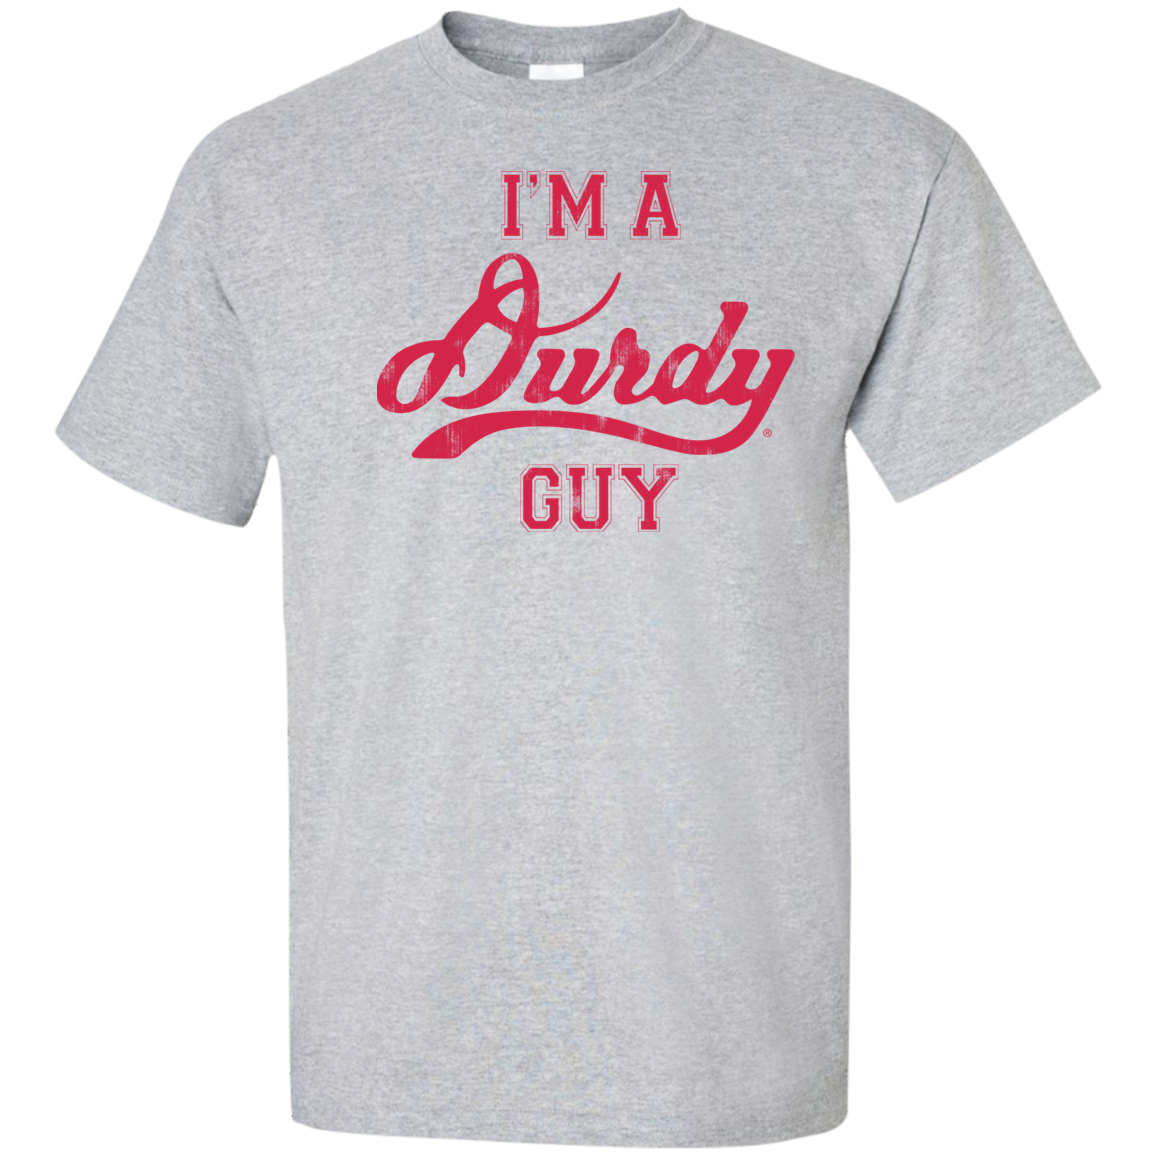 Durdy Guy Gildan Tall Ultra Cotton T-Shirt